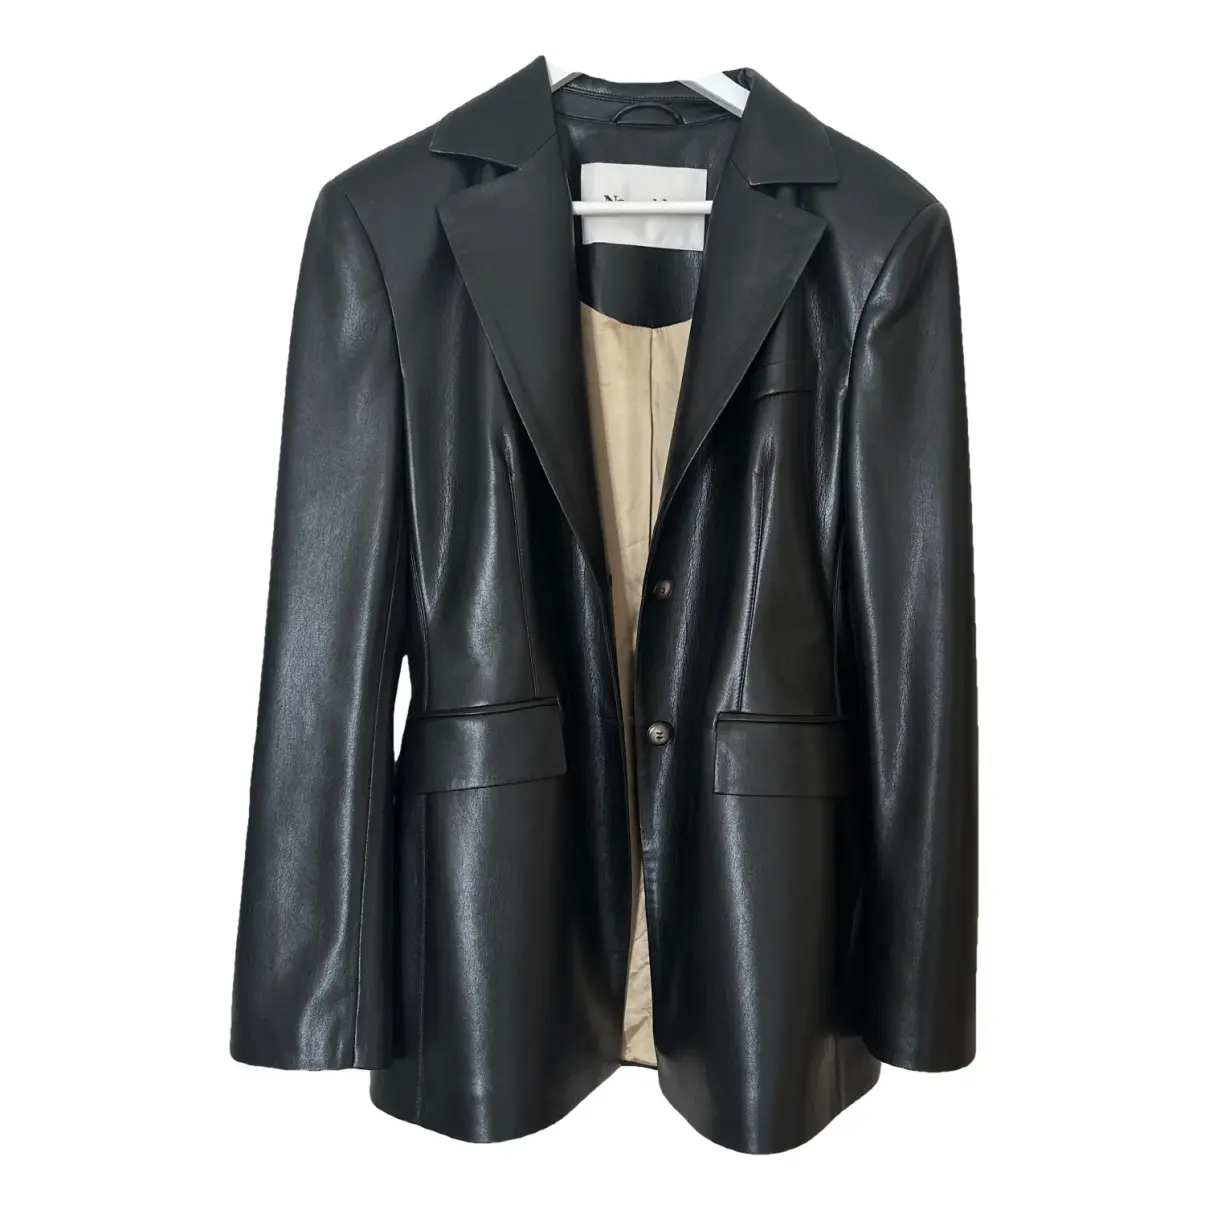 Cancun leather blazer